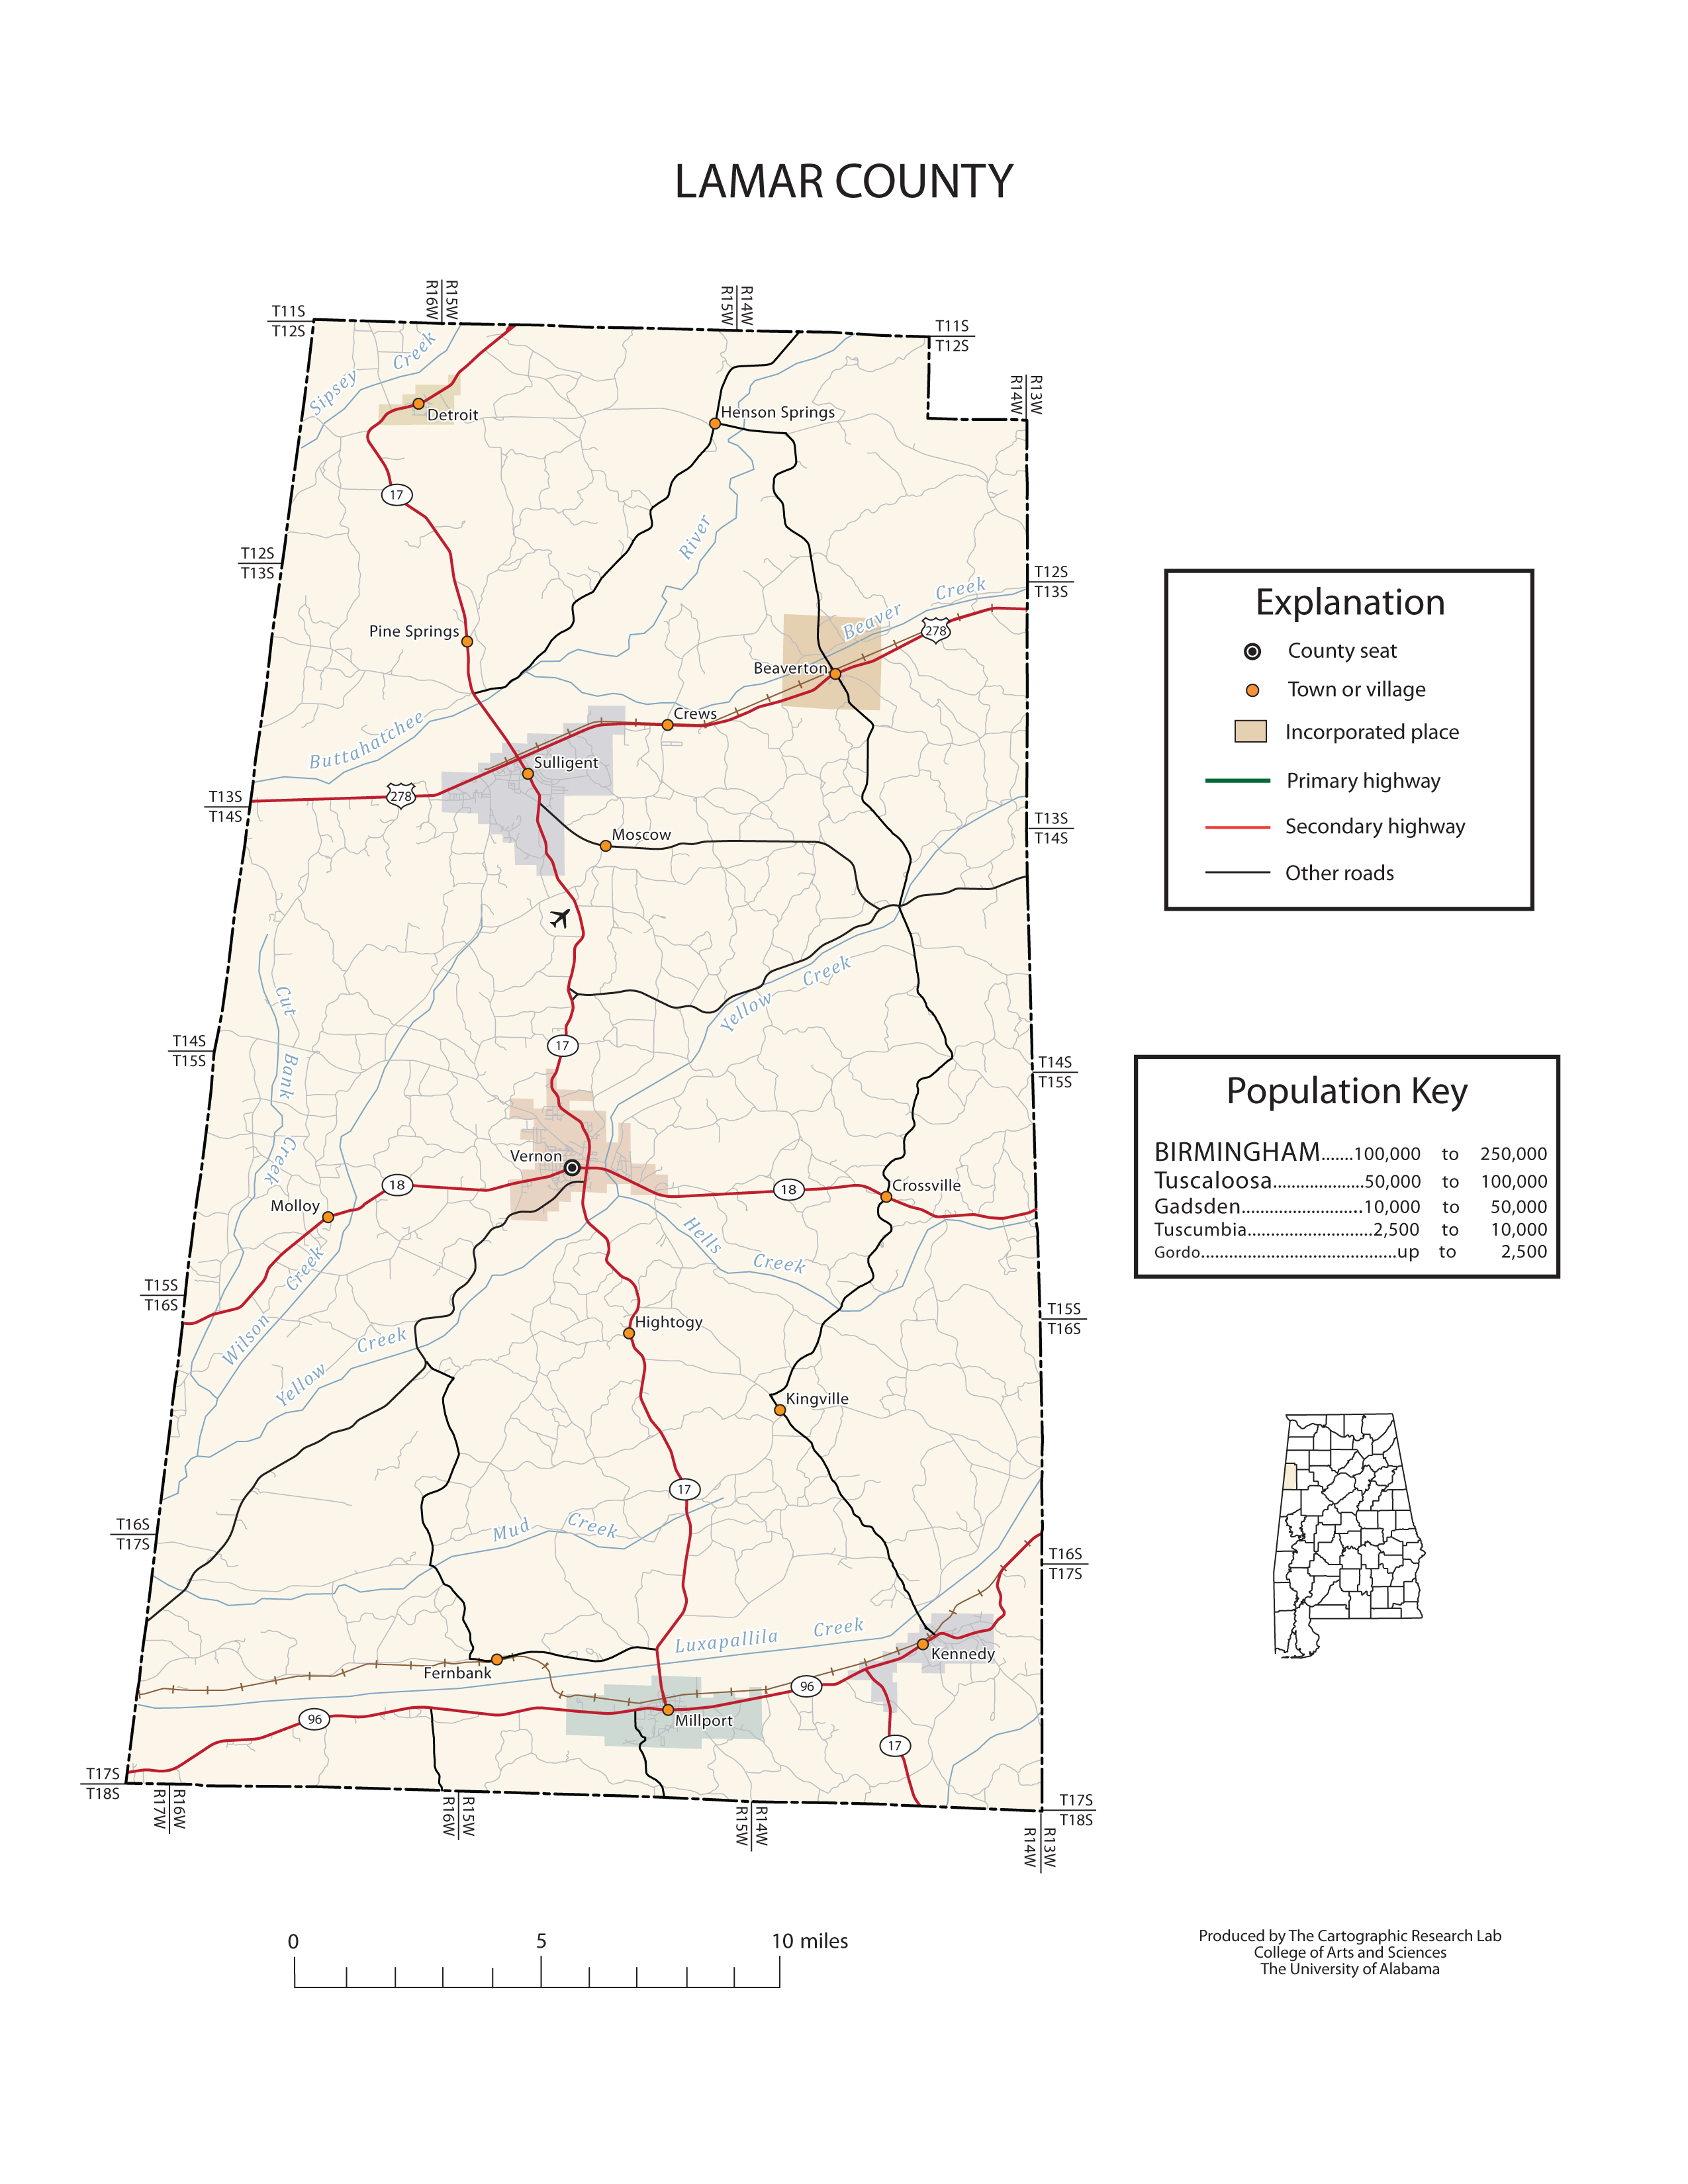 Maps of Lamar County